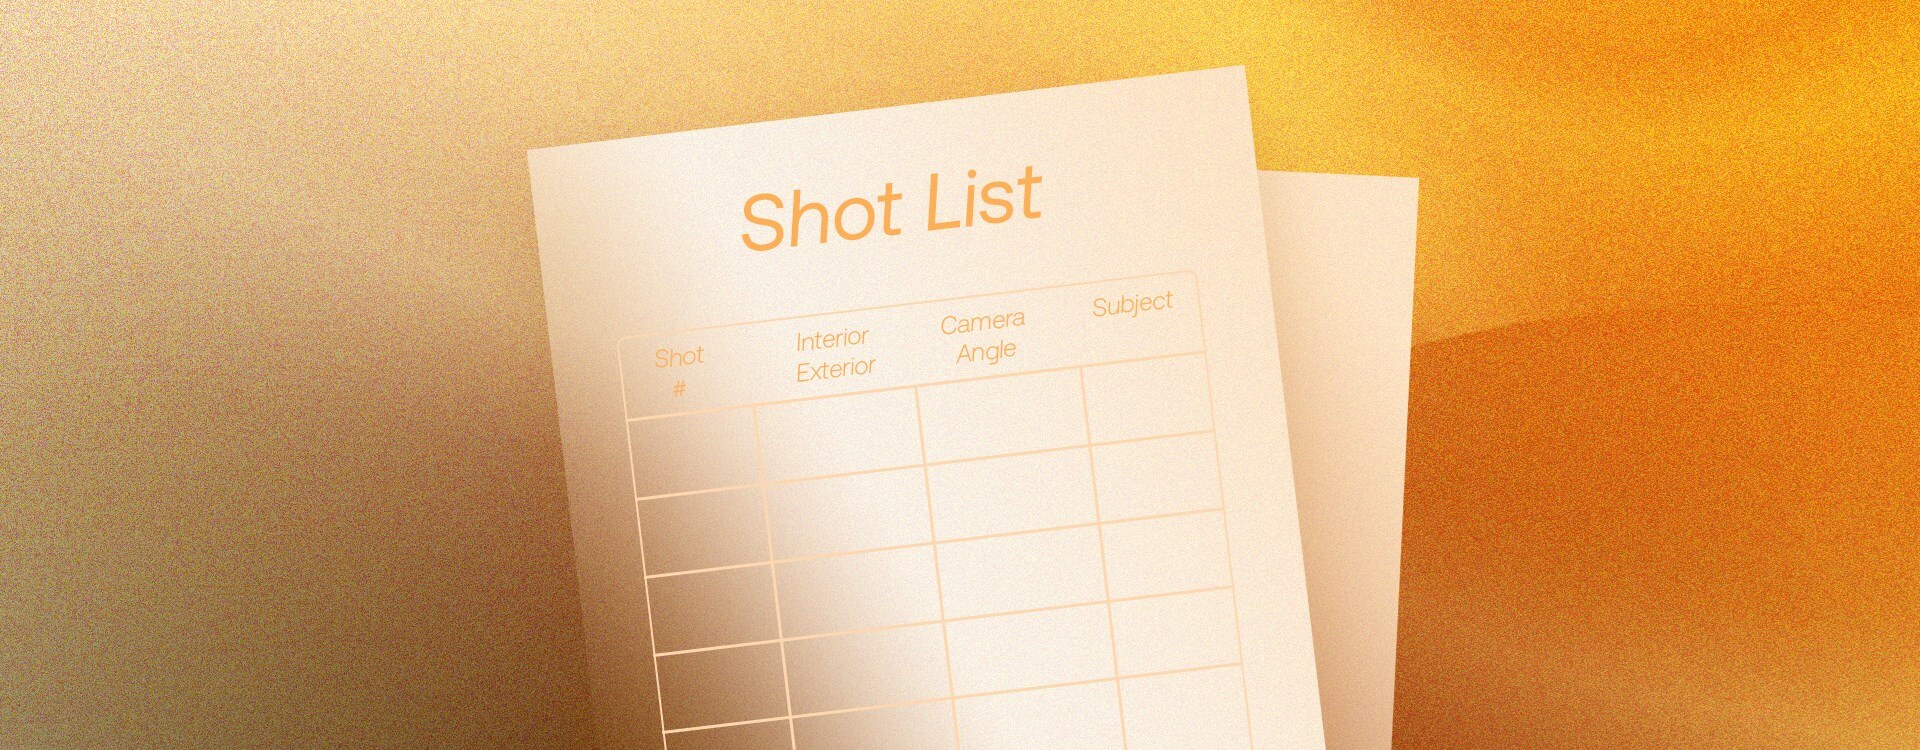 How to make a shot list